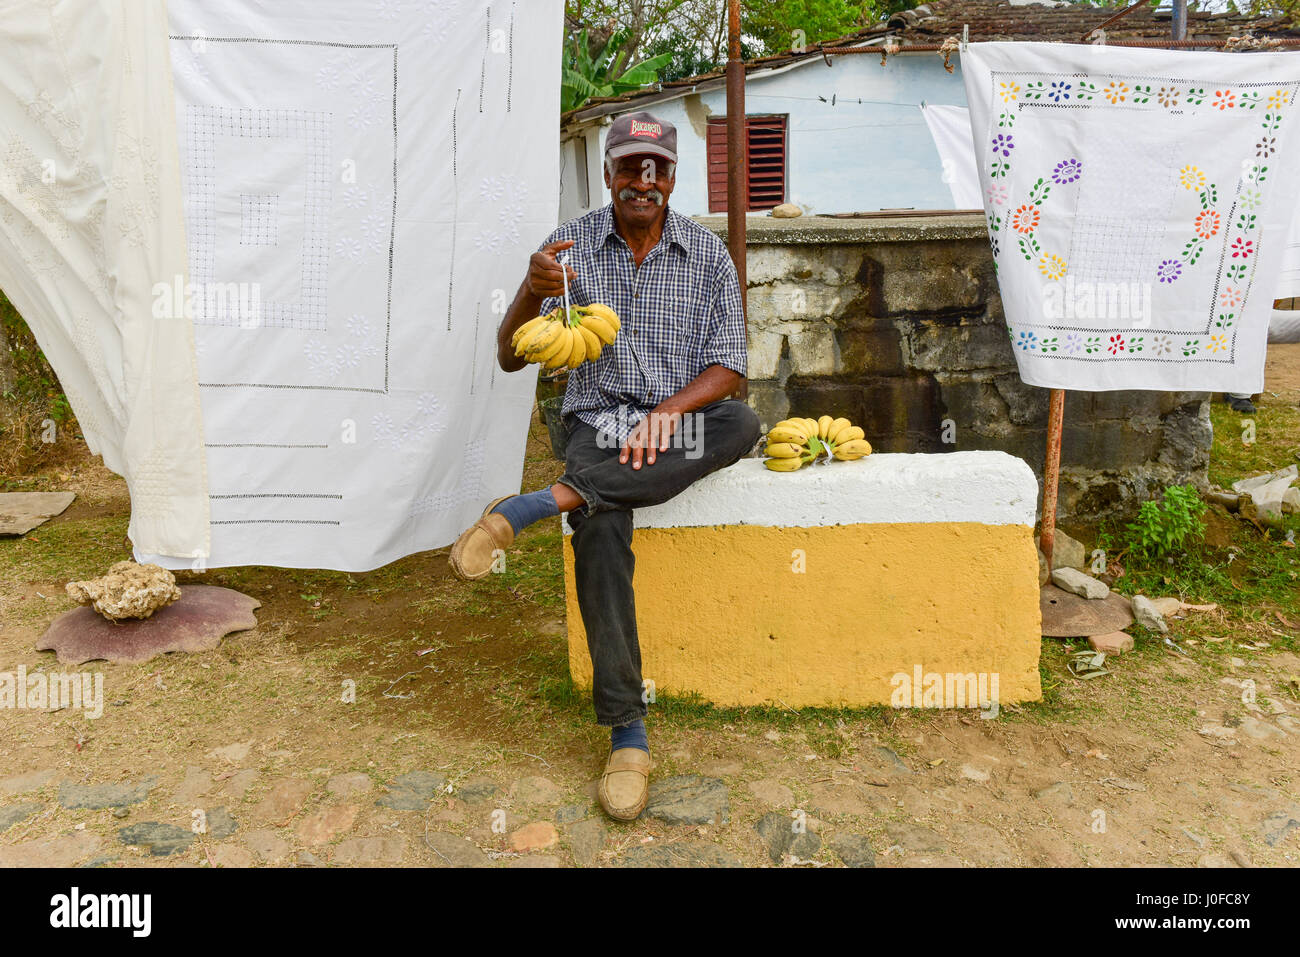 Manaca Iznaga, Cuba - Jan 12, 2017: Cuban man selling bananas in Manaca Iznaga, Valle de los Ingenios, Trinidad, Cuba. Stock Photo